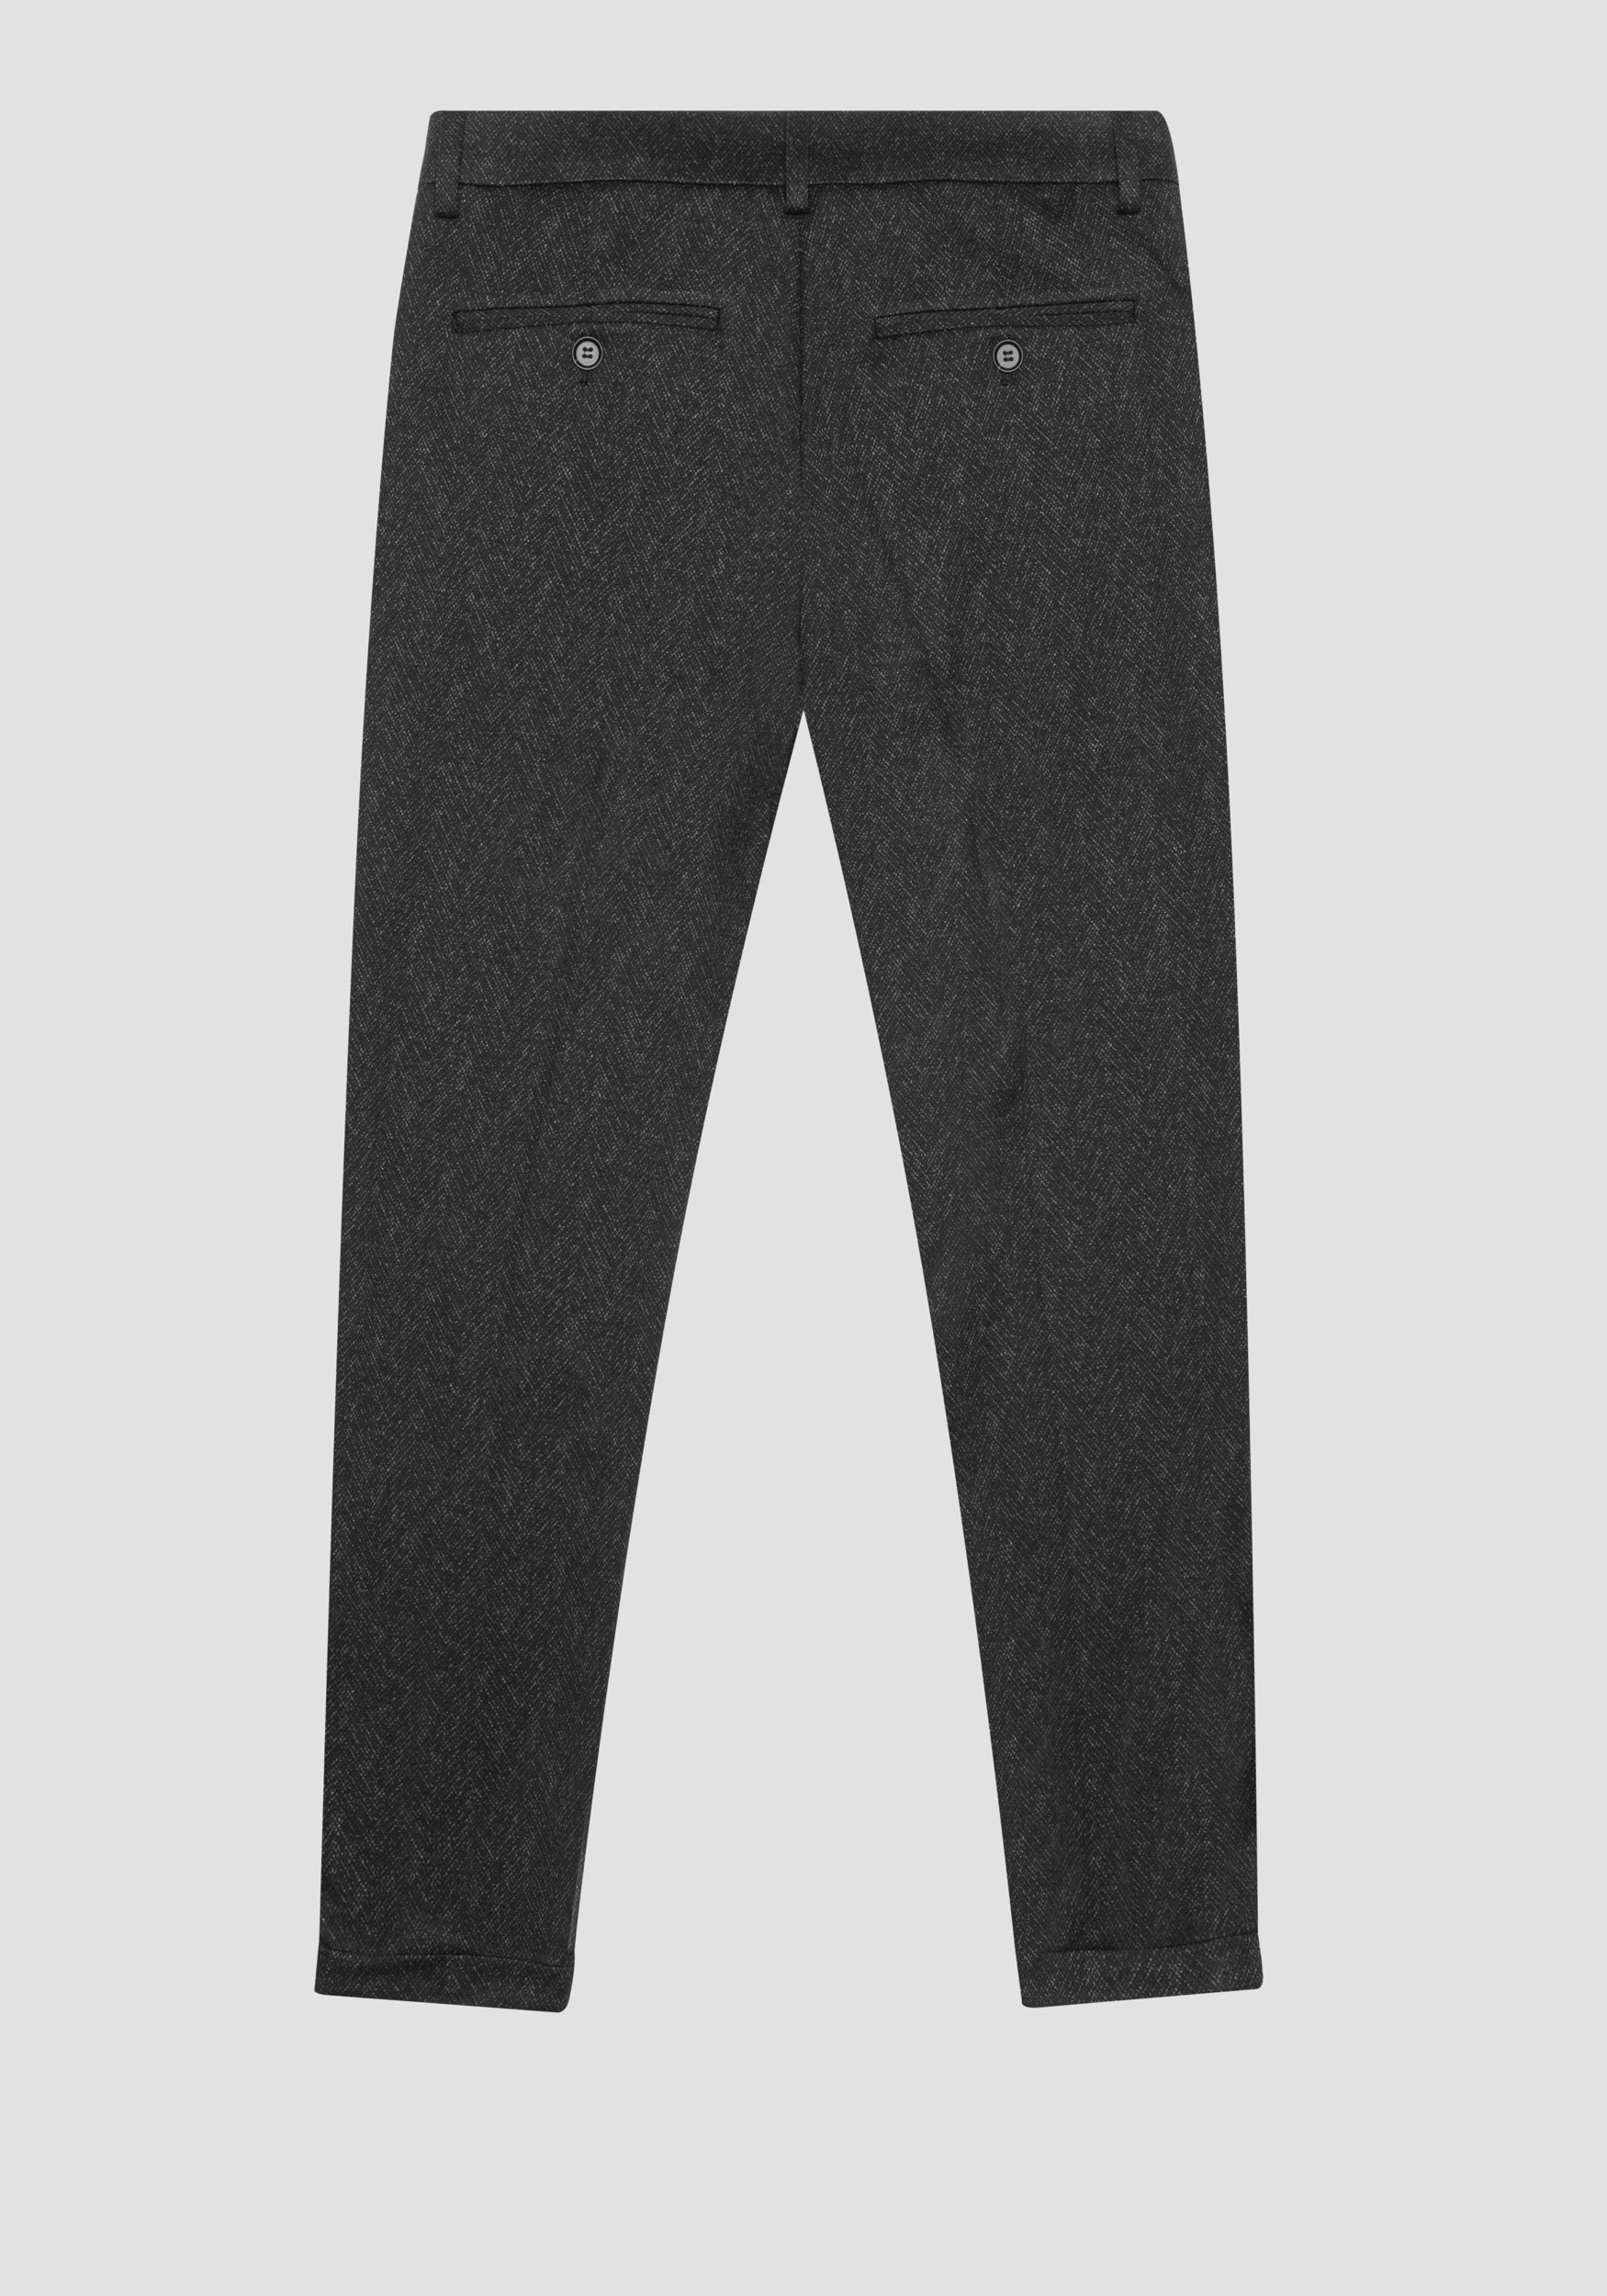 Antony Morato Pantalon Super Skinny Fit Ashe En Tissu De Viscose Melangee Stretch Avec Motif A Chevrons Noir | Homme Pantalons